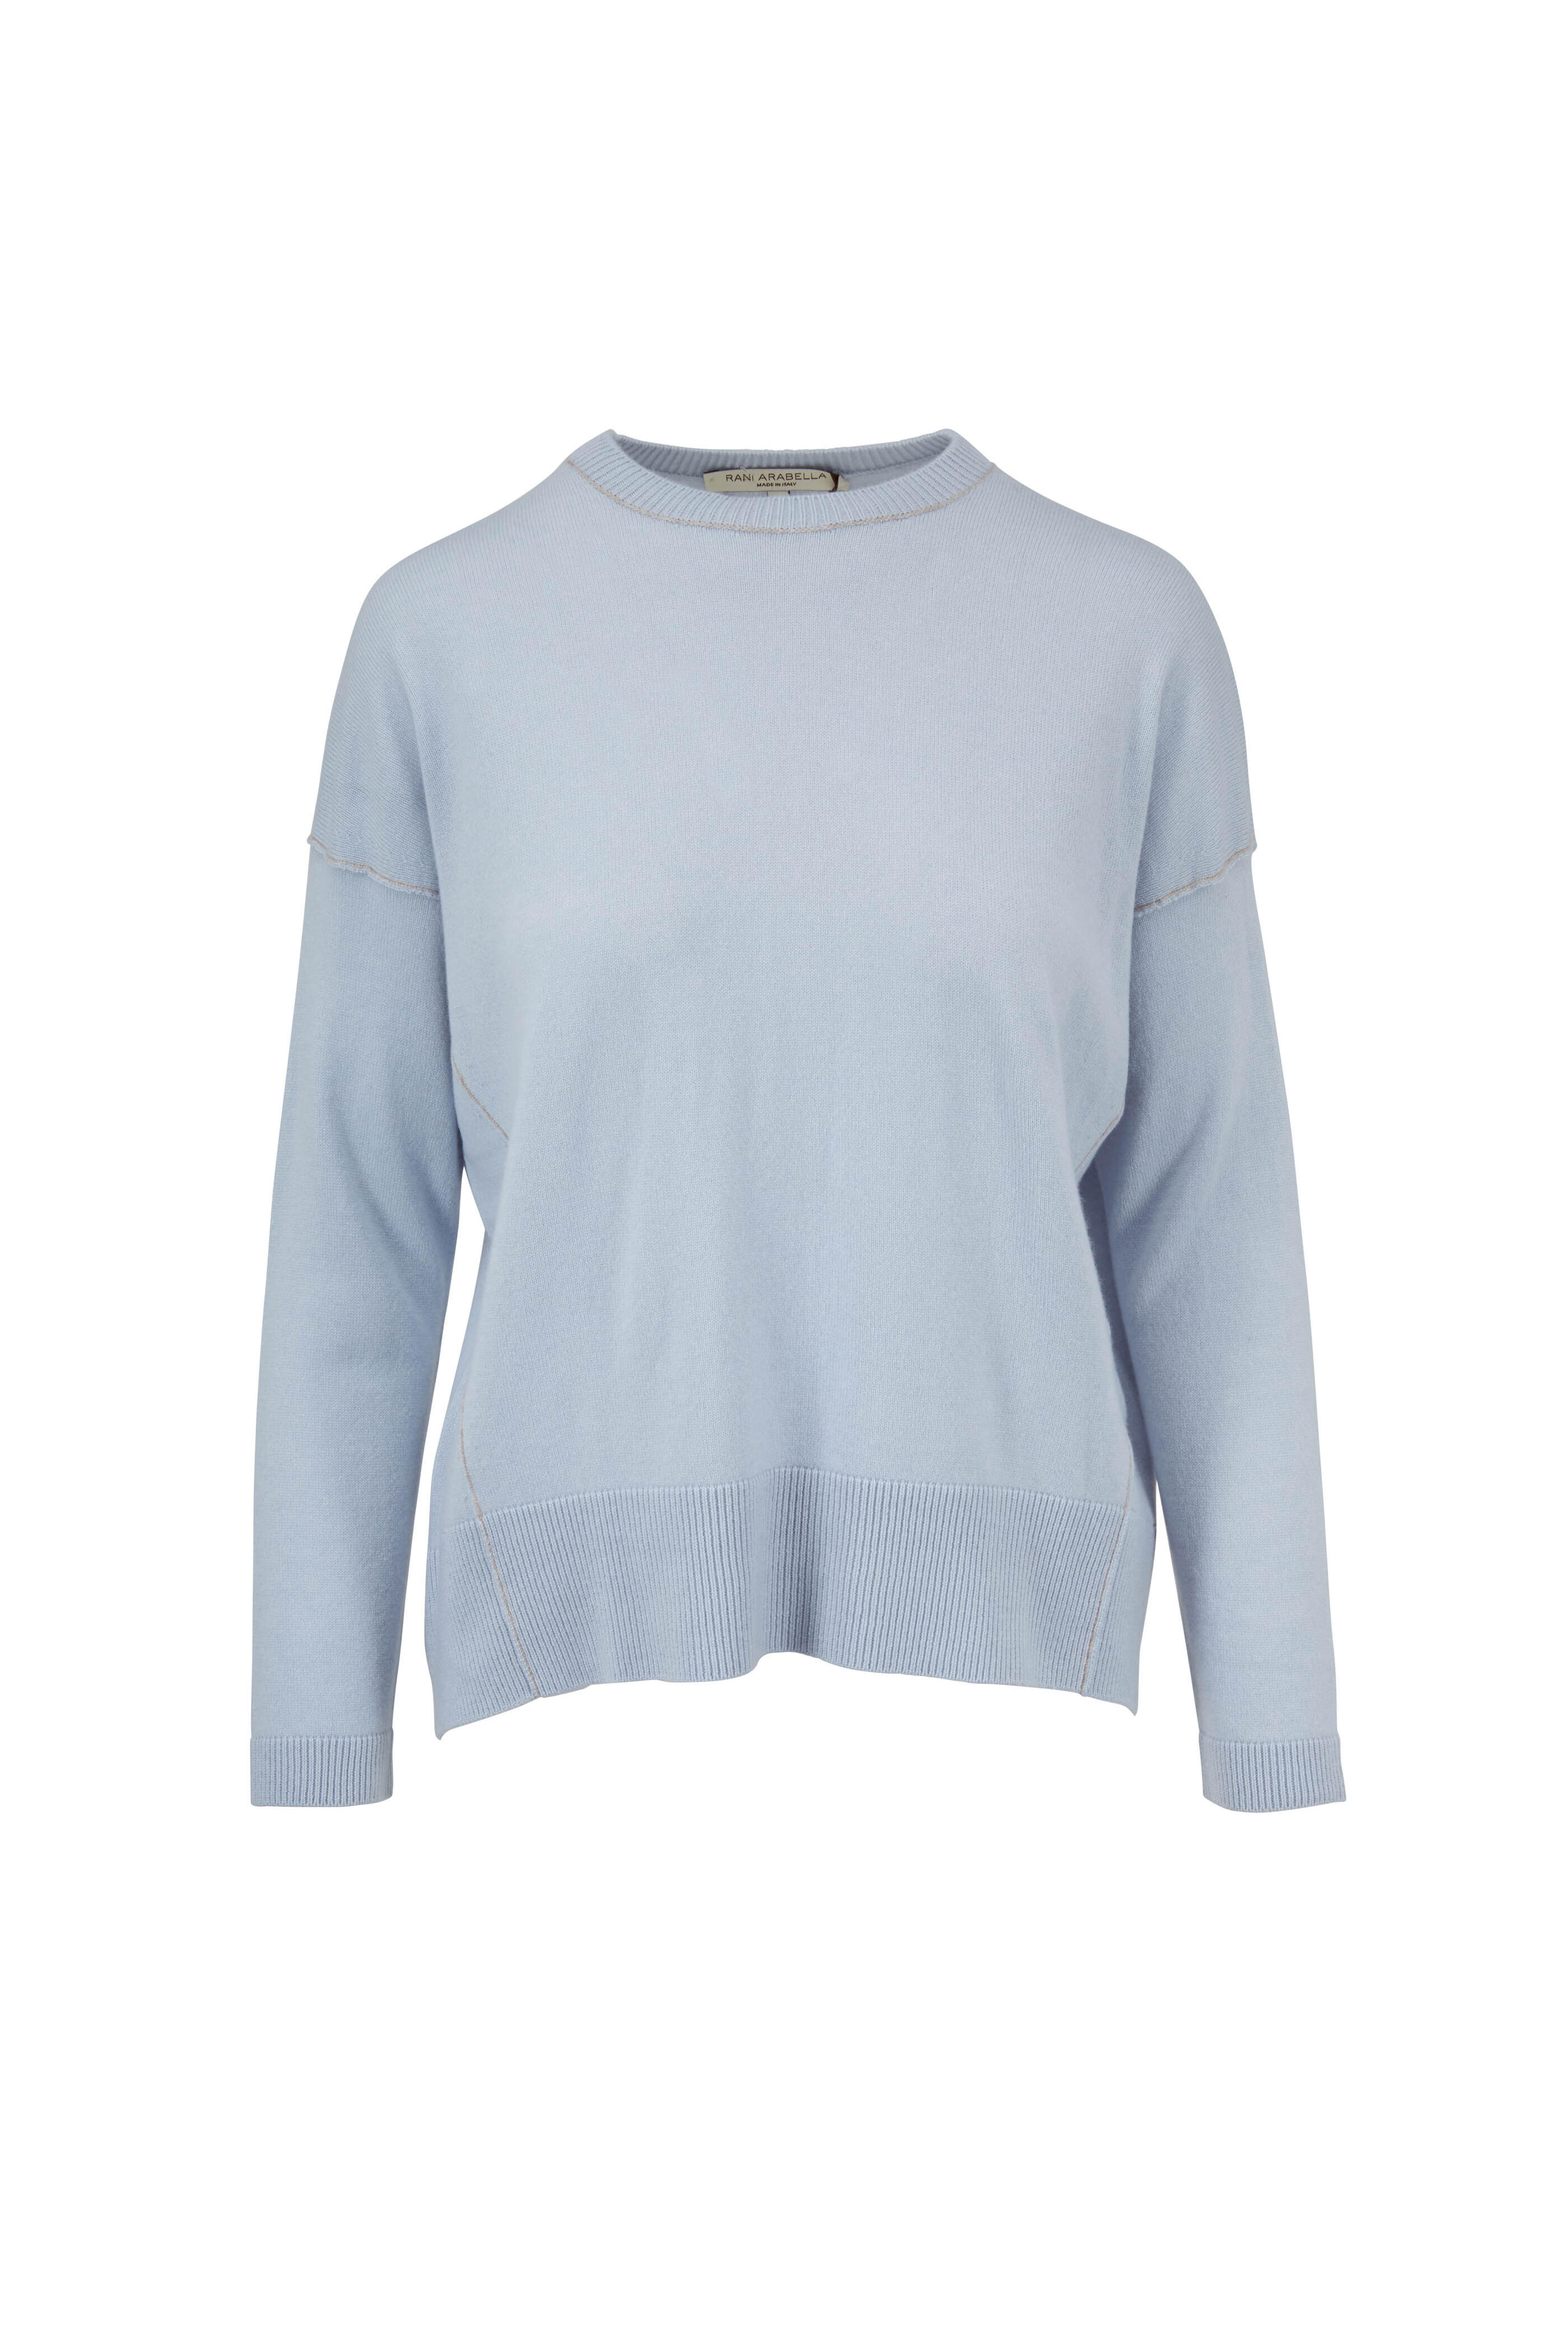 Rani Arabella - Light Blue Cashmere High-Low Sweater